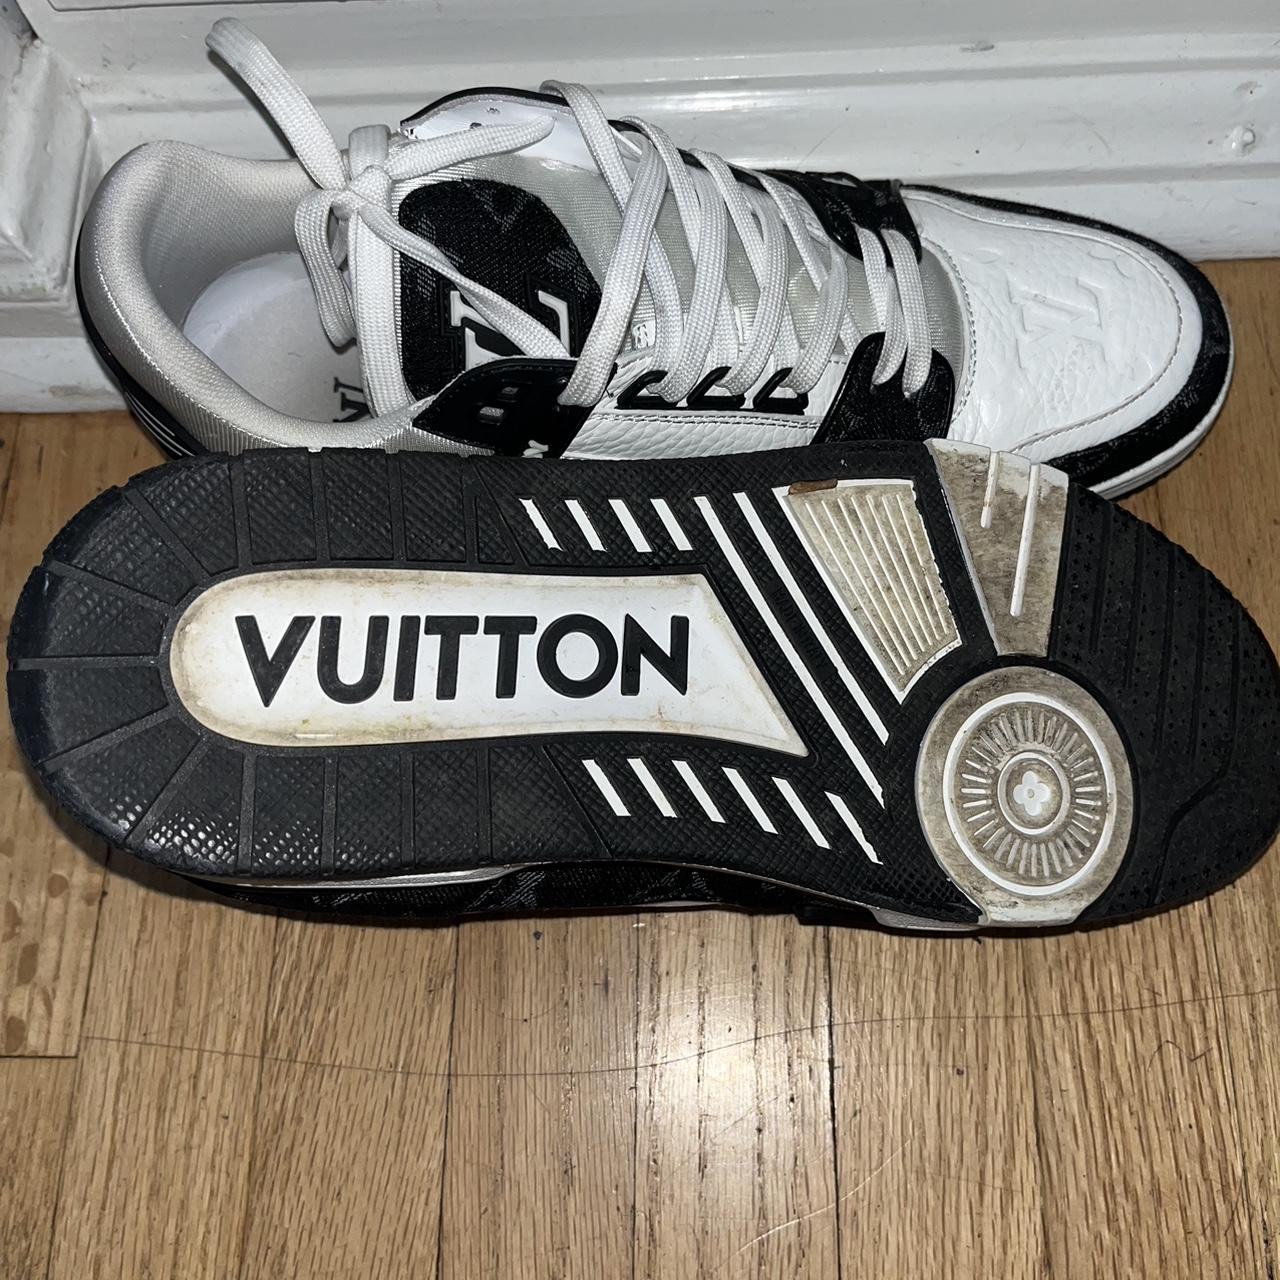 Louis Vuitton Trainers, light wear, no tags. super